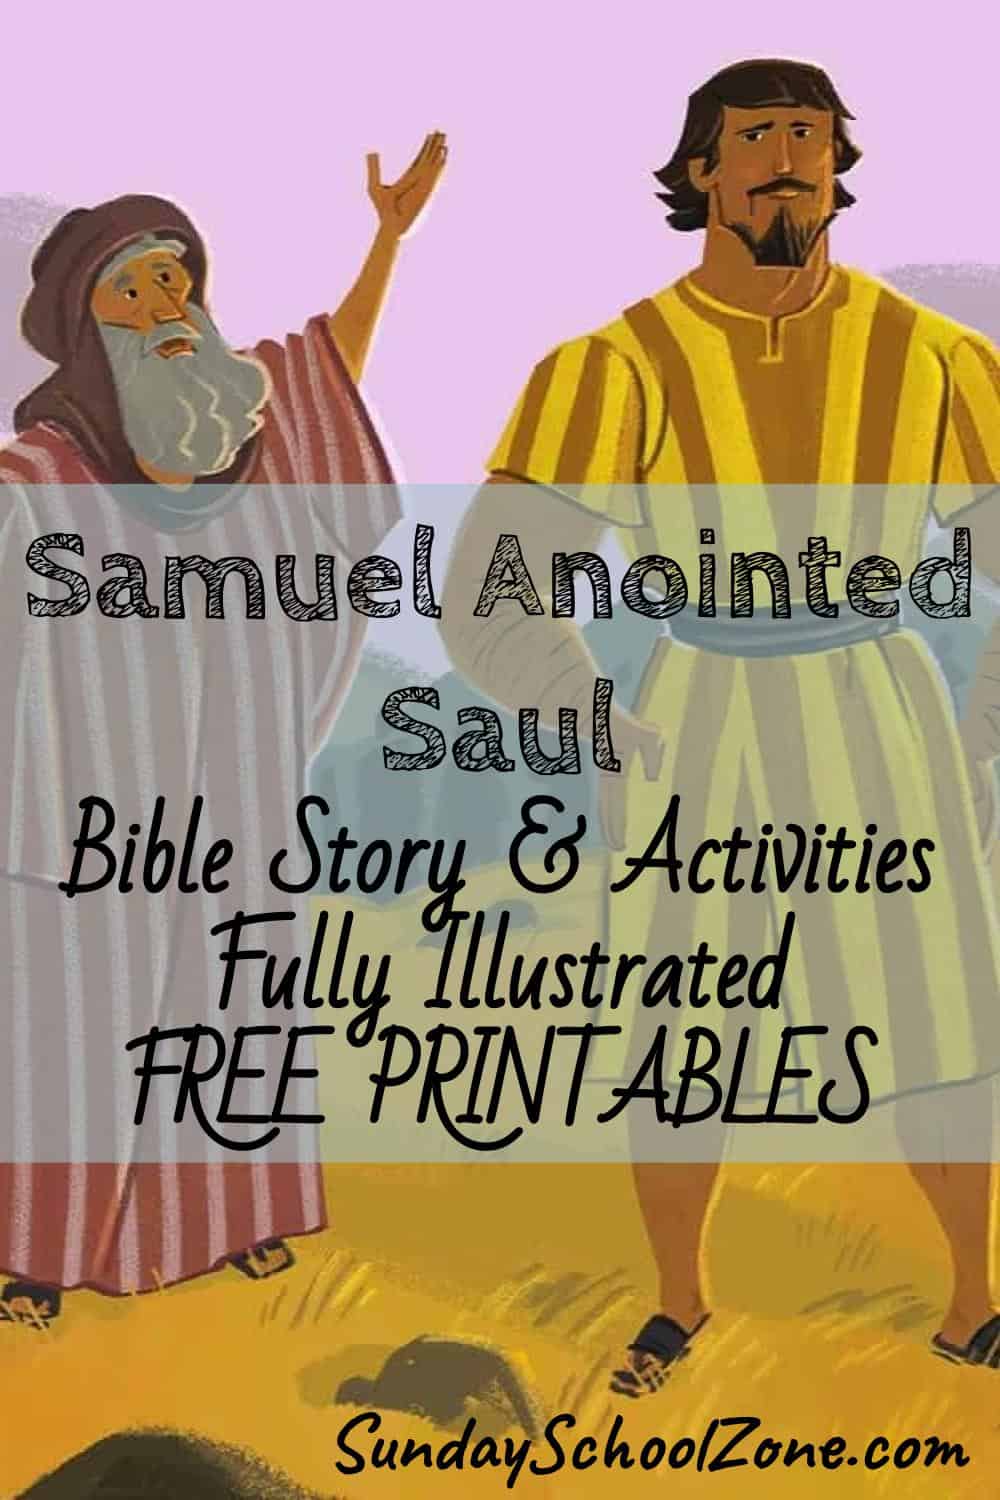 King Saul, Bible, History & Timeline - Video & Lesson Transcript